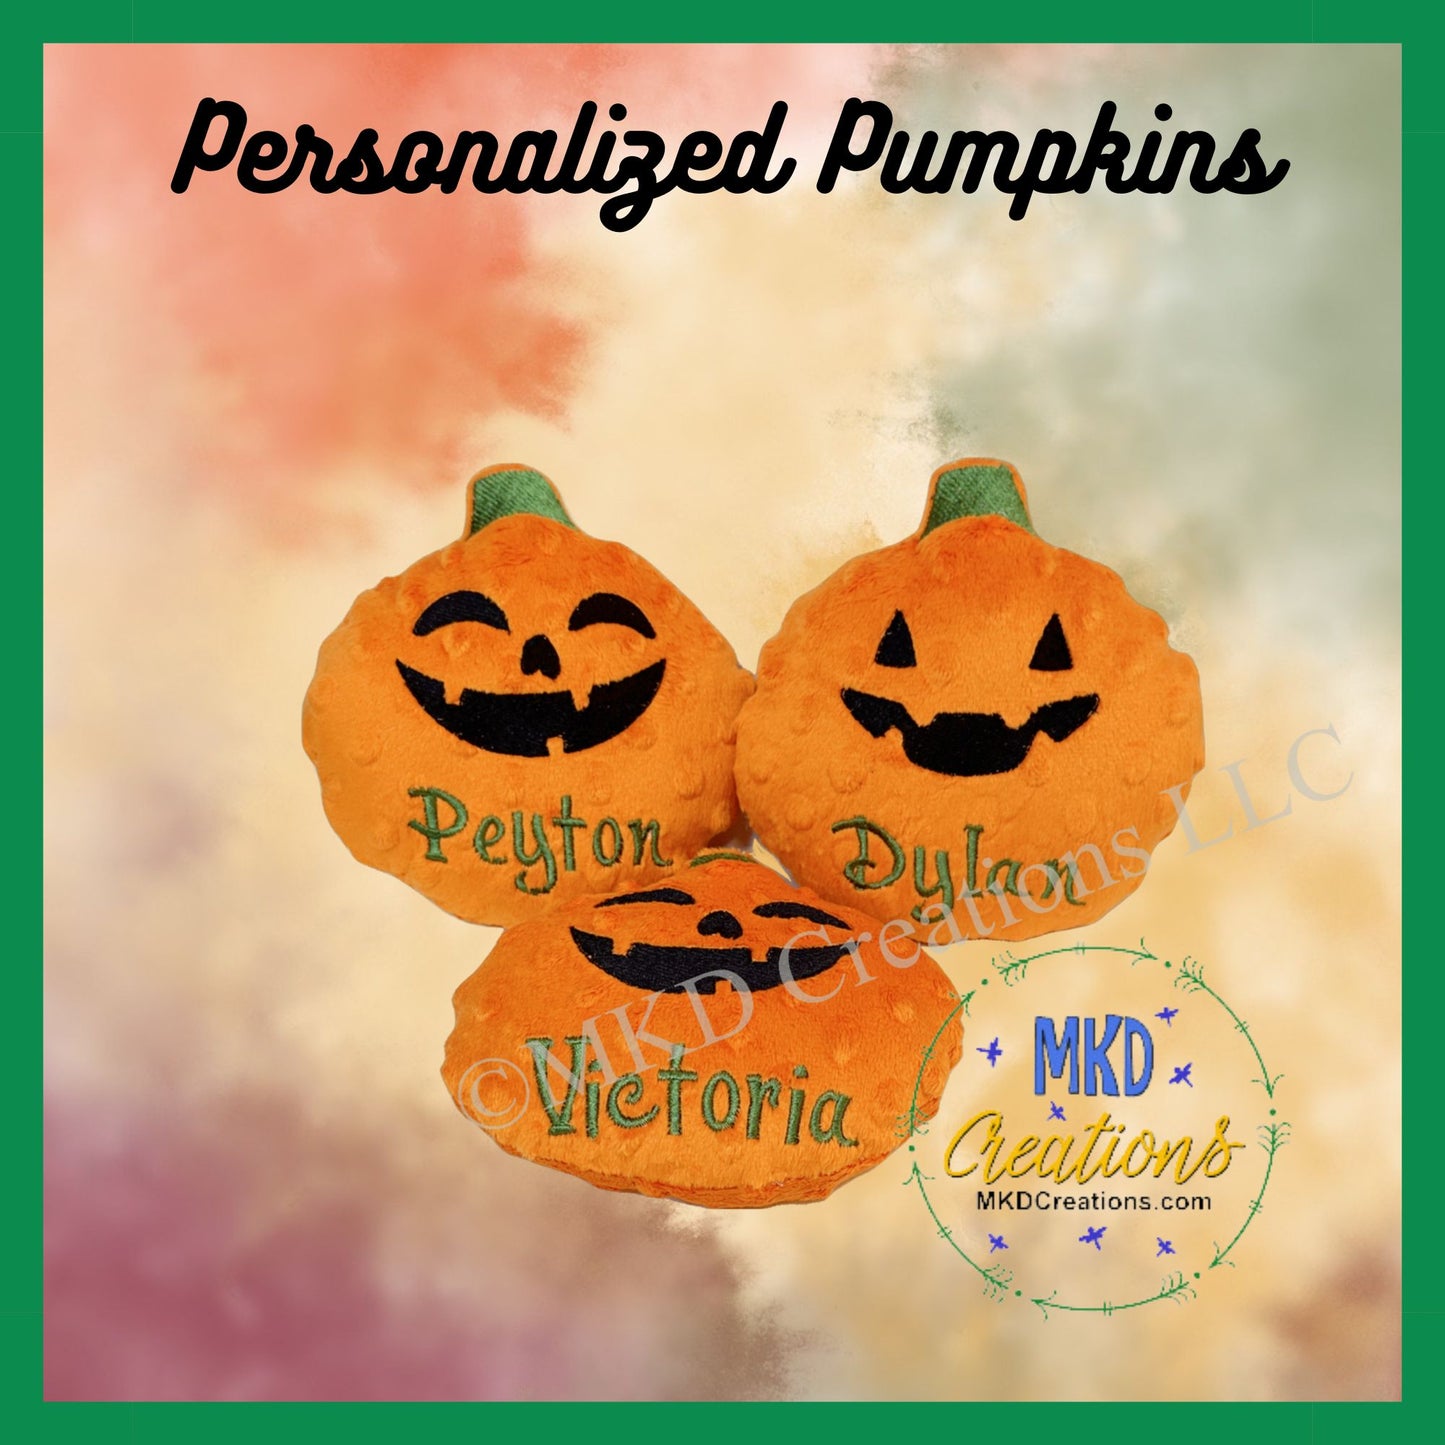 Personalized Pumpkin Plushie| Orange Pumpkin| Stuffed Pumpkin Halloween Gift or Treat| Stuffed Pillow| Custom Pumpkin| Put A Name On It